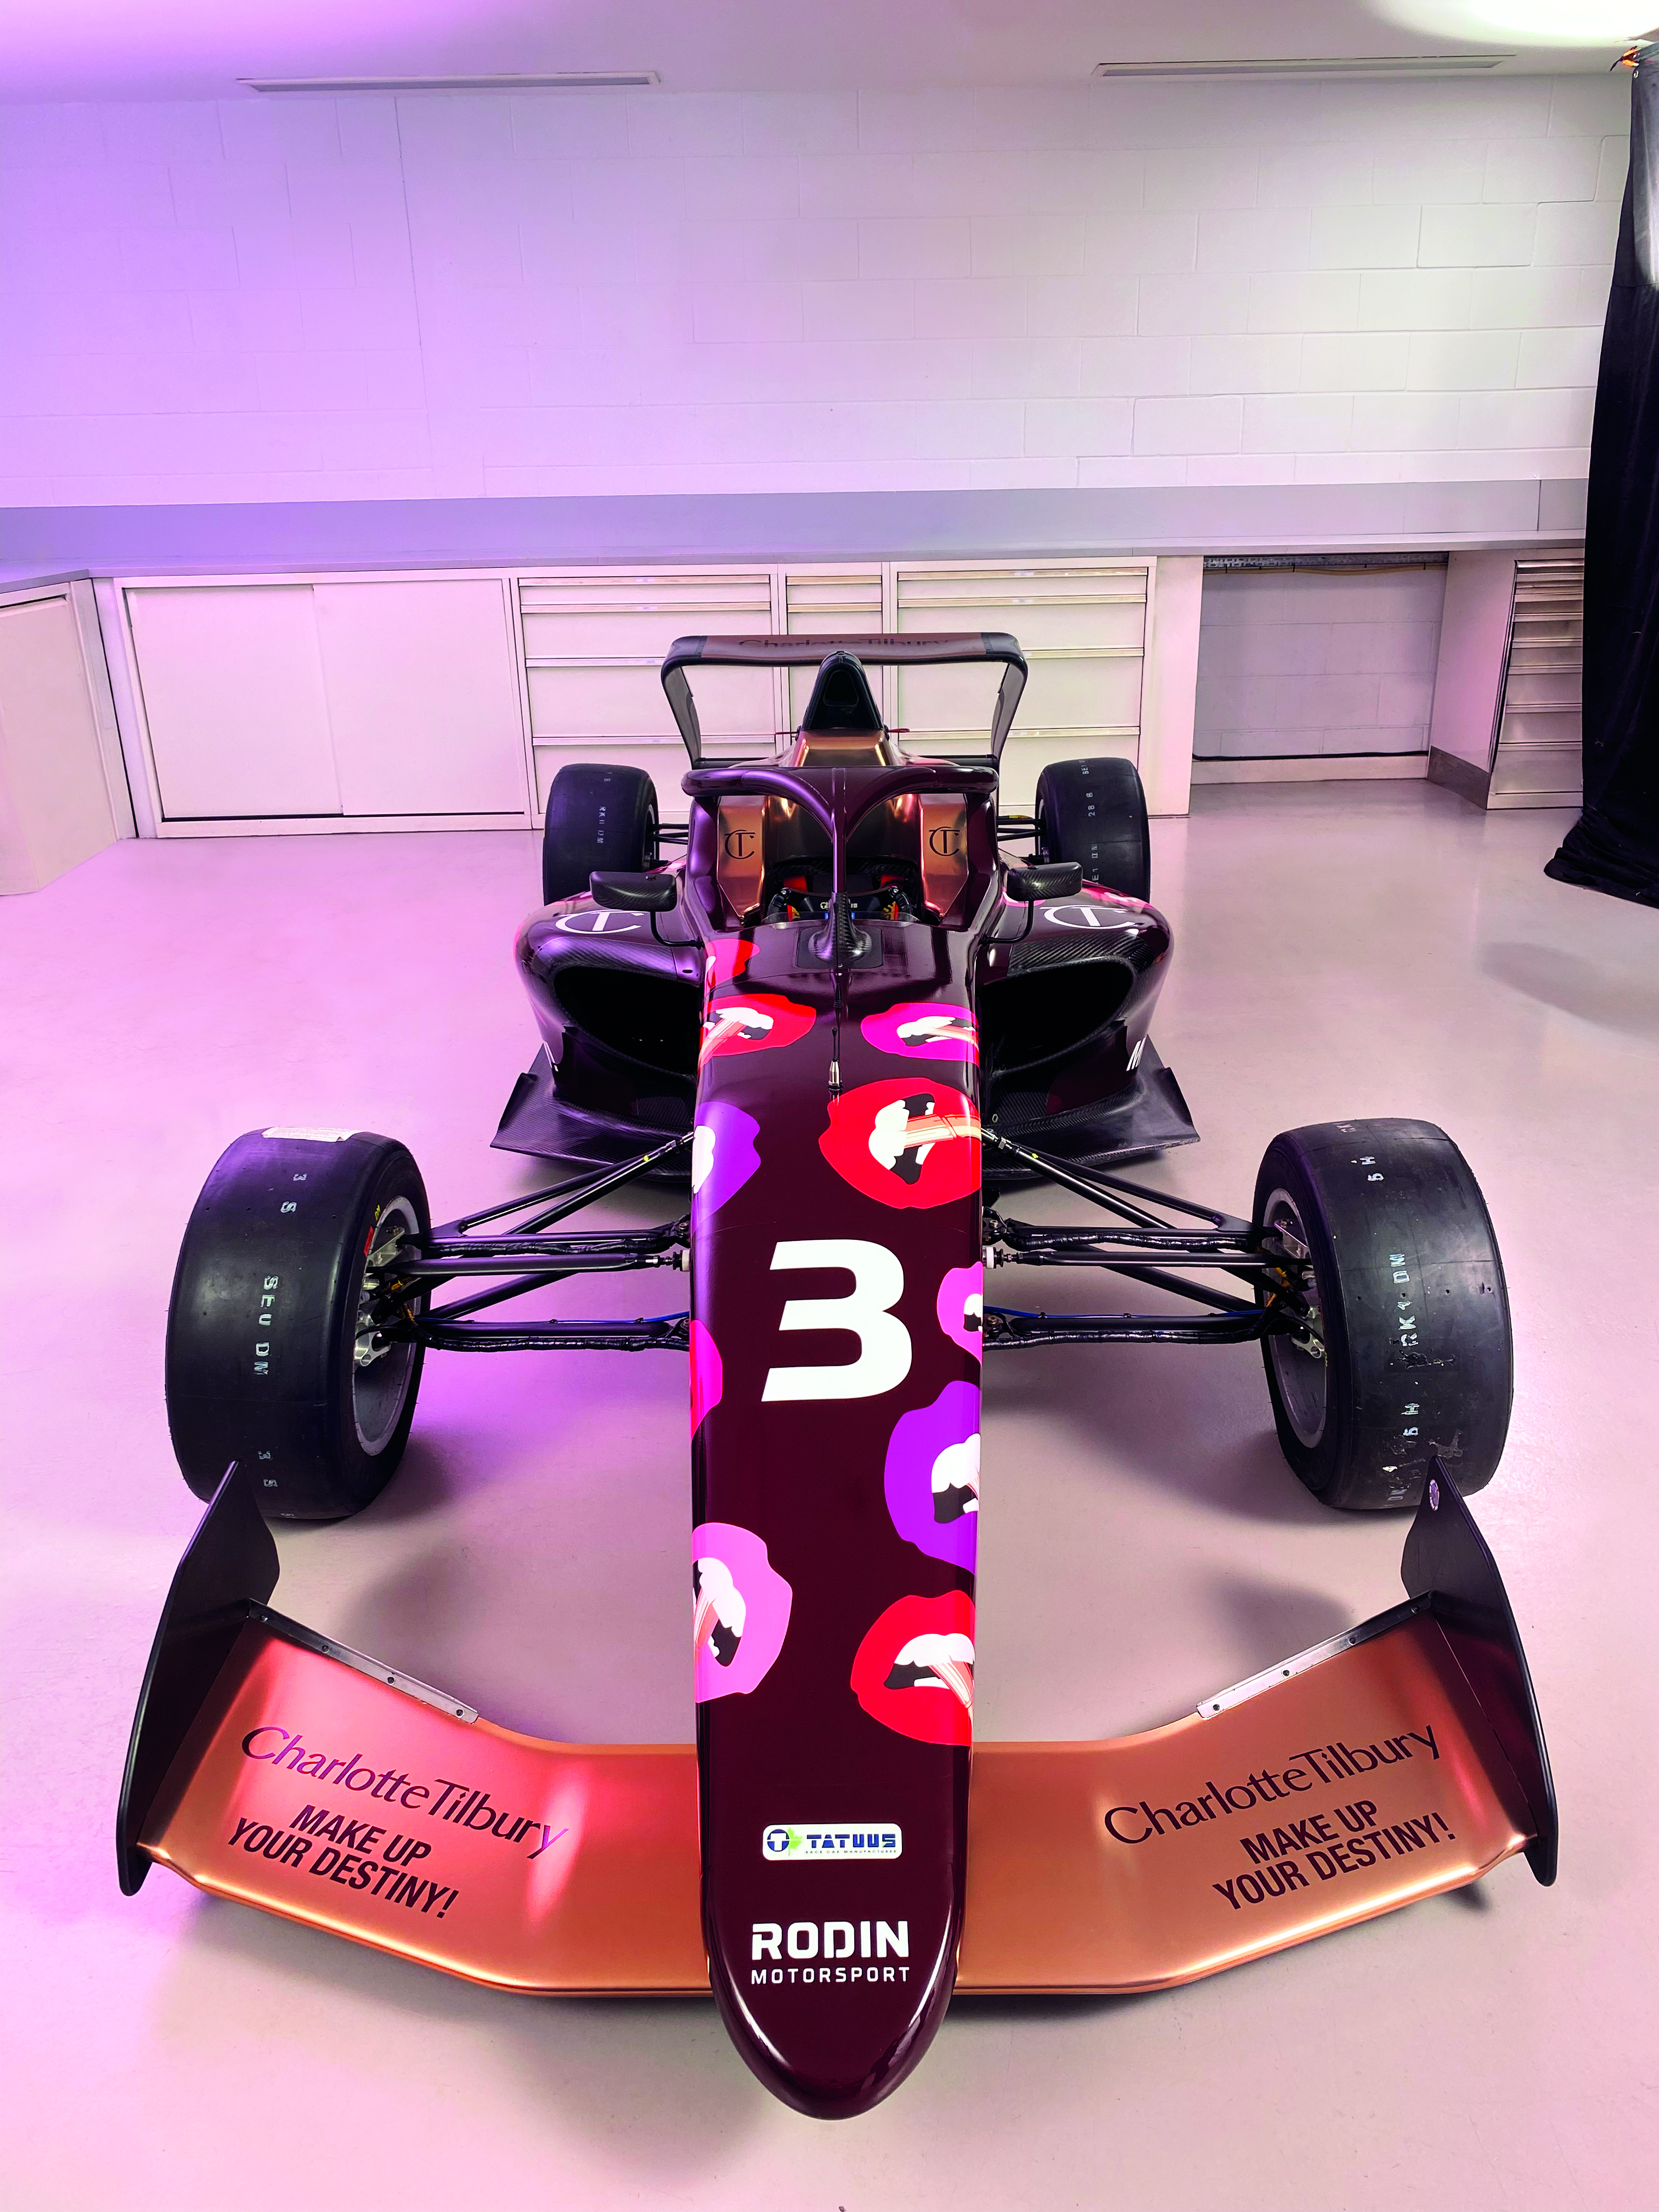 Charlotte Tilbury Formula 1 Academy Rennwagen Front